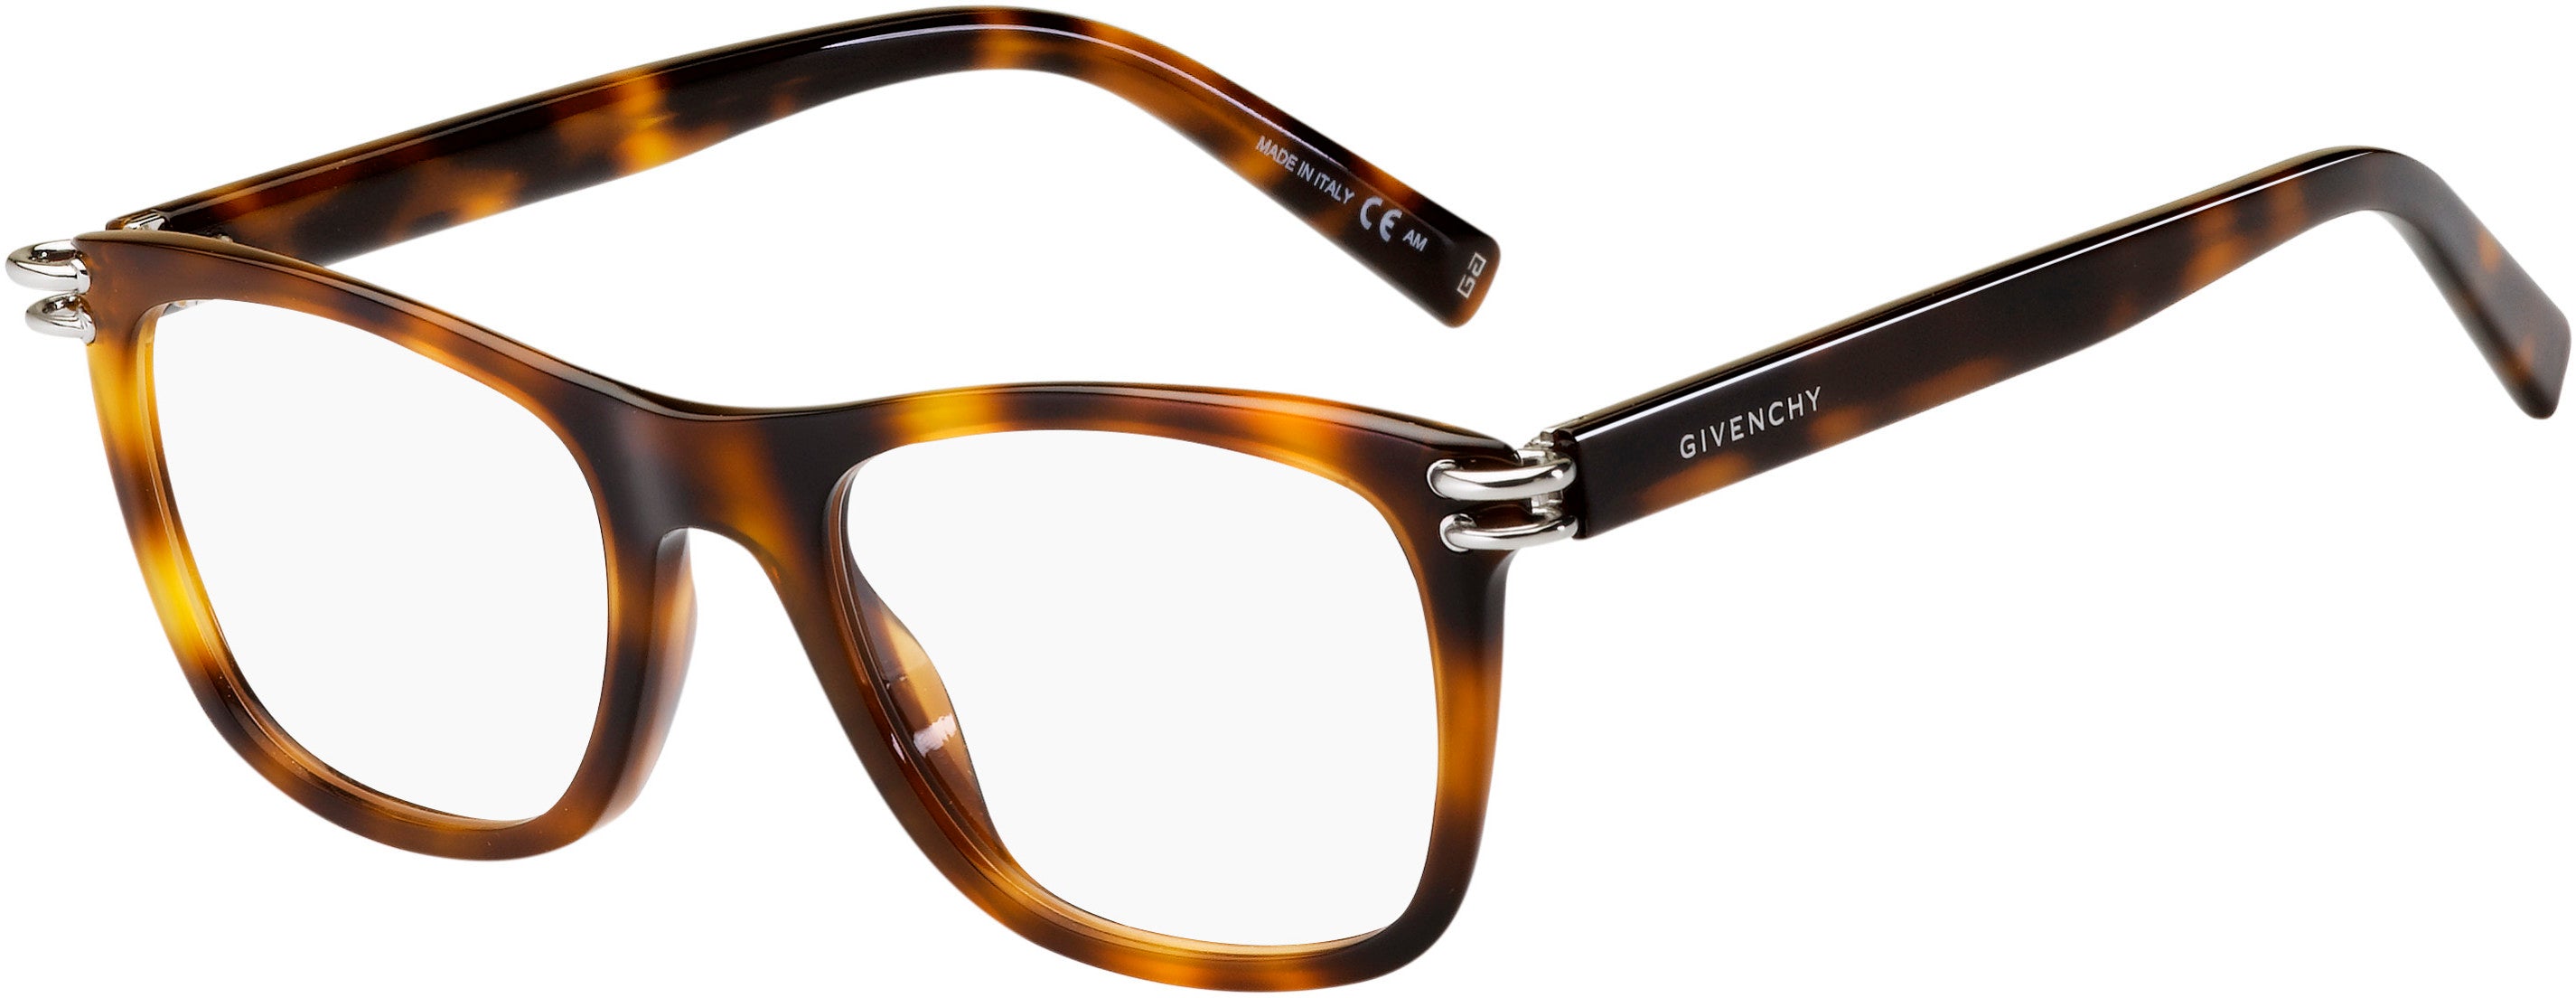  Givenchy 0131 Rectangular Eyeglasses 0WR9-0WR9  Brown Havana (00 Demo Lens)